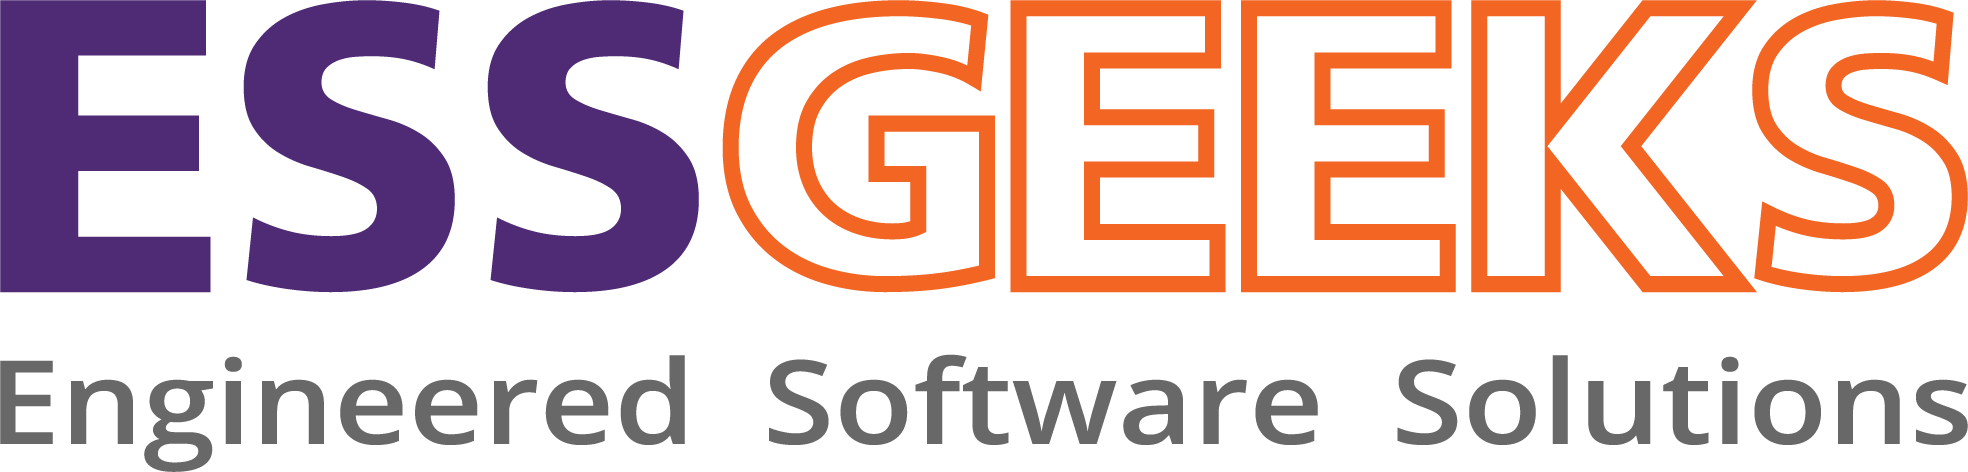 ESSGEEKS – Software Development